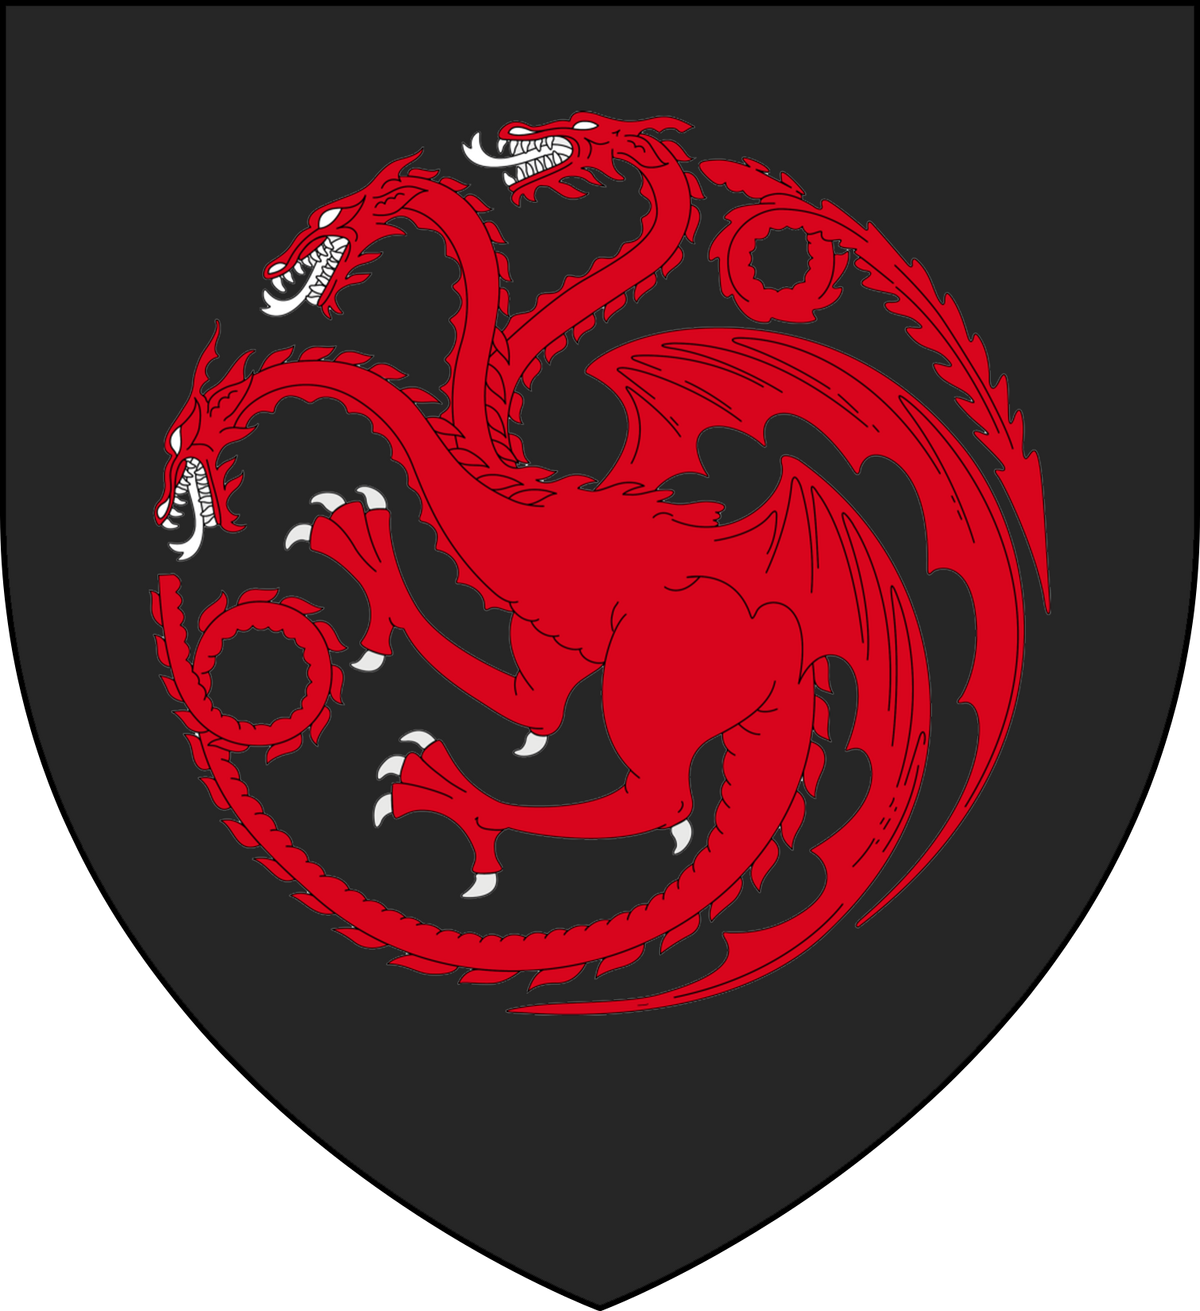 GARCHOMP / ALTARIA – ChompTaria, Casa dos Targaryen